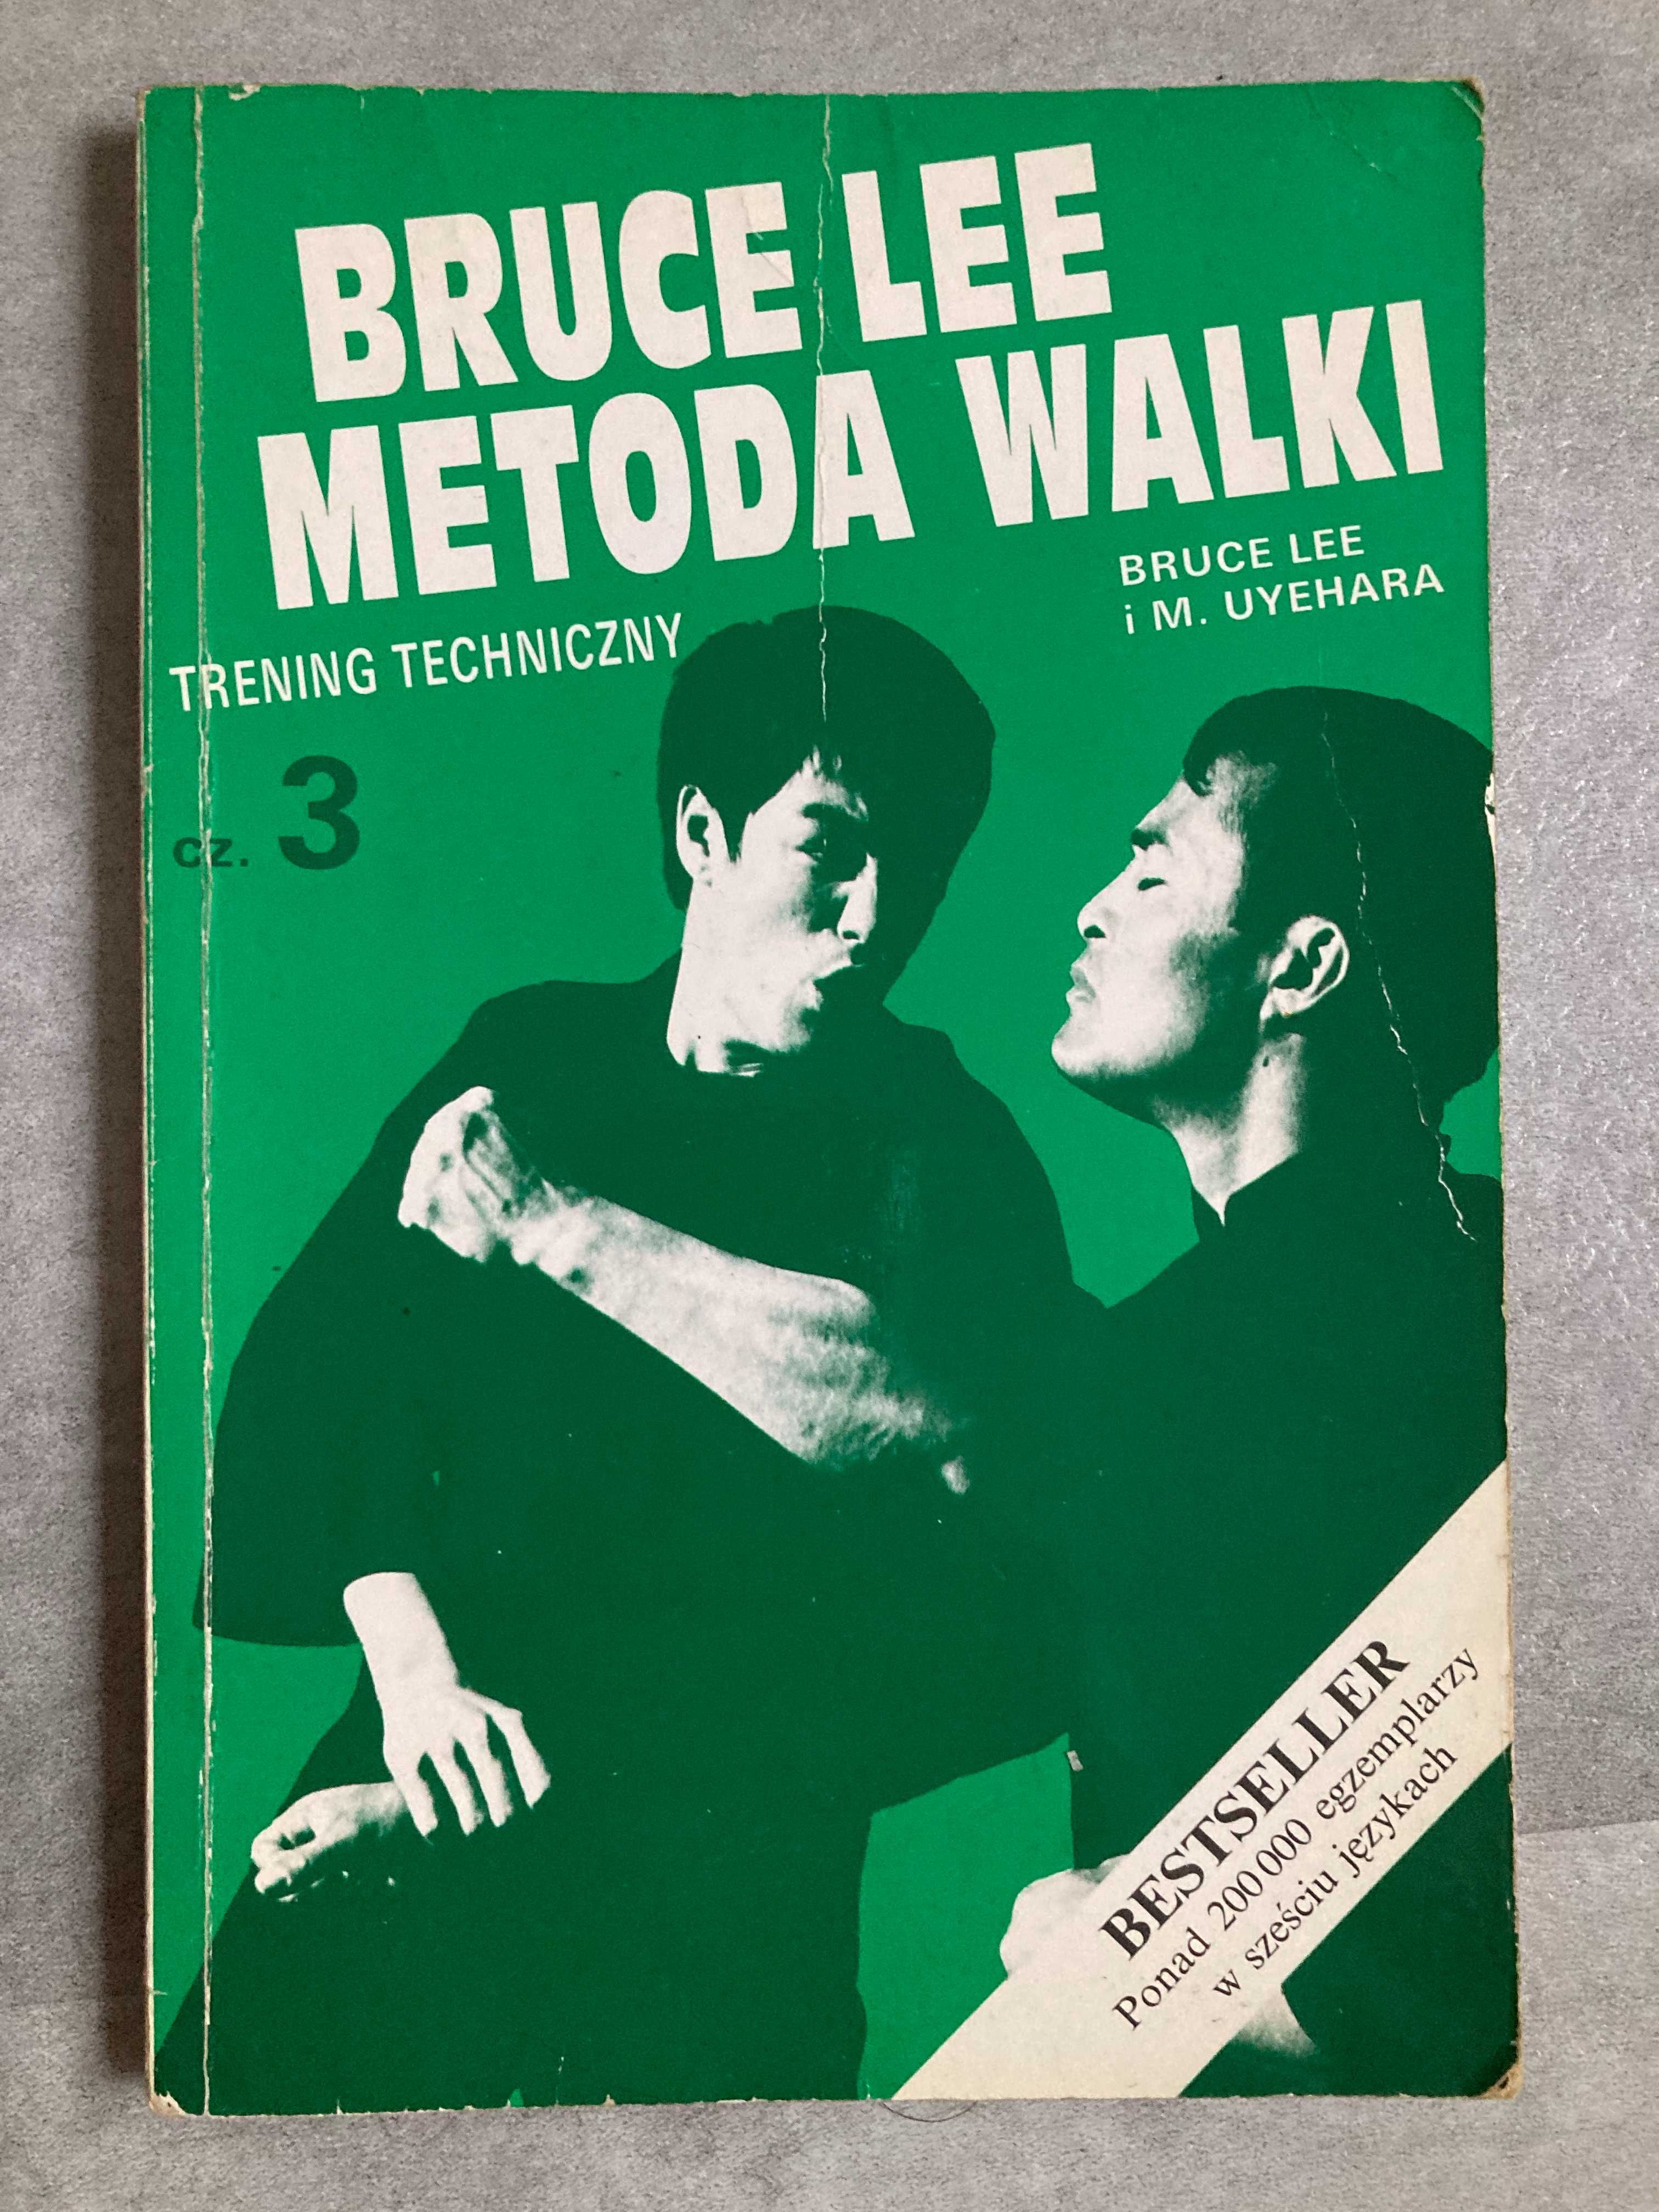 Bruce Lee Metoda Walki cz. 3